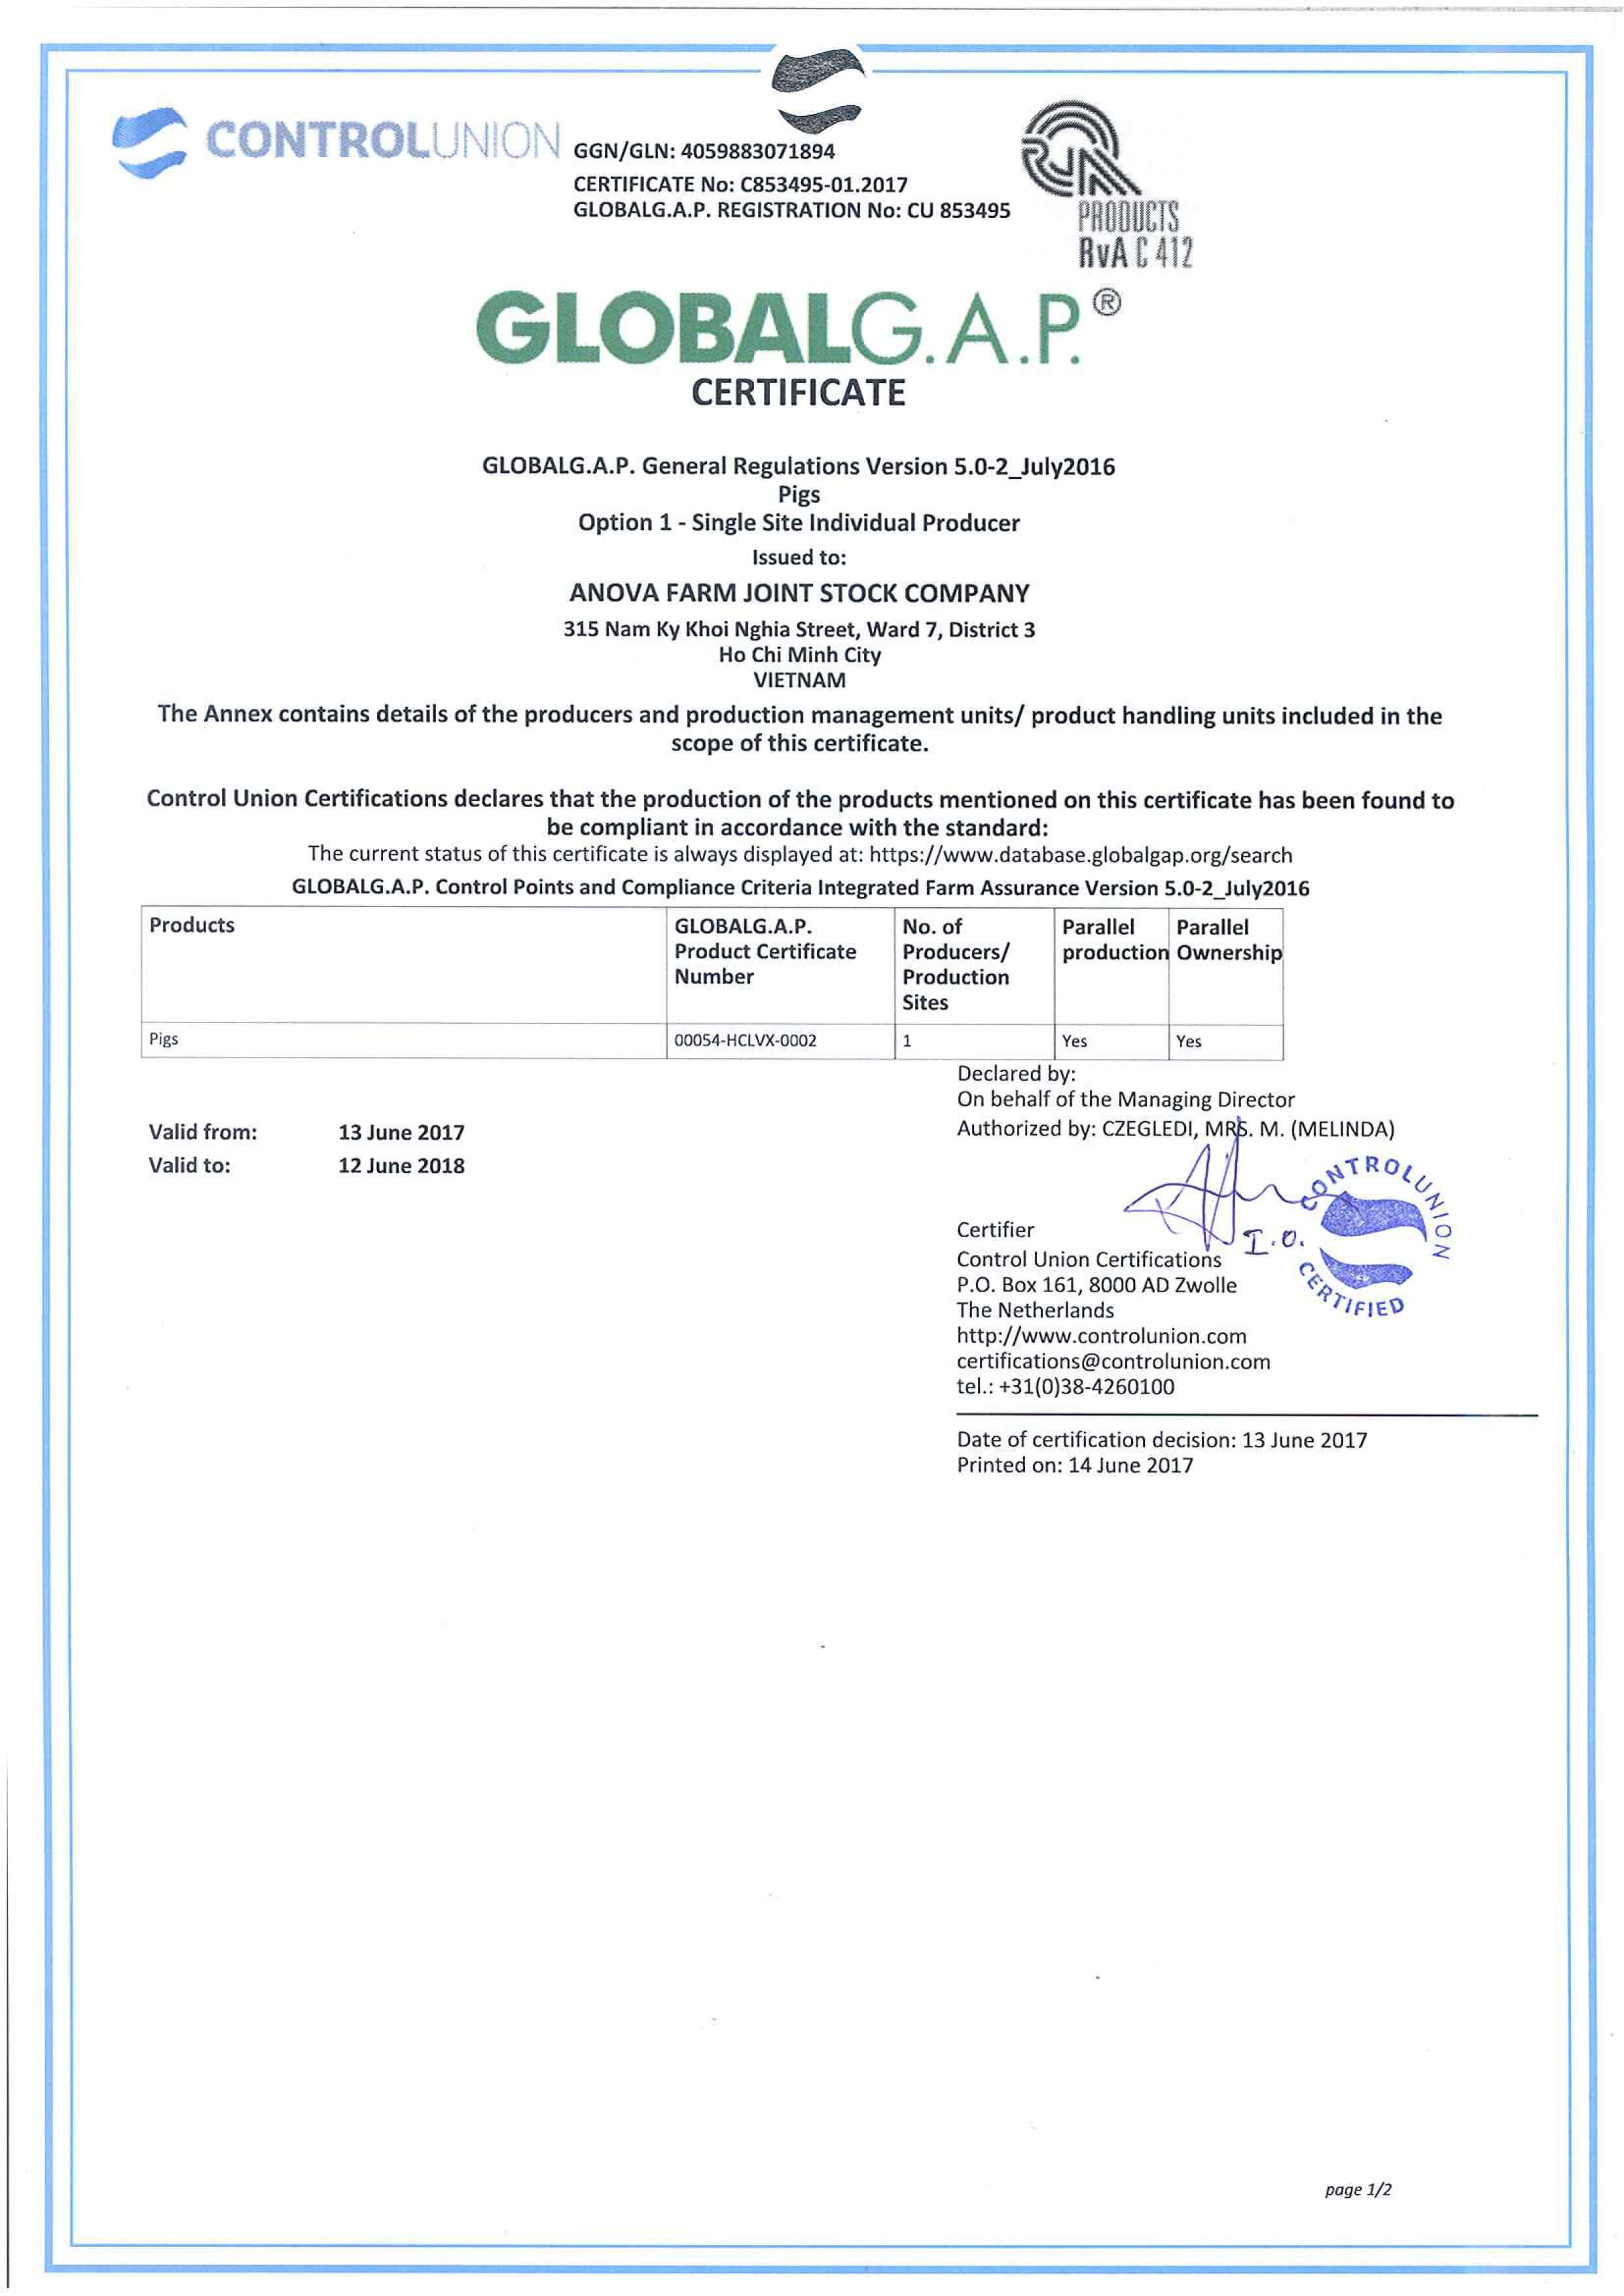 GlobalG.A.P Certificate